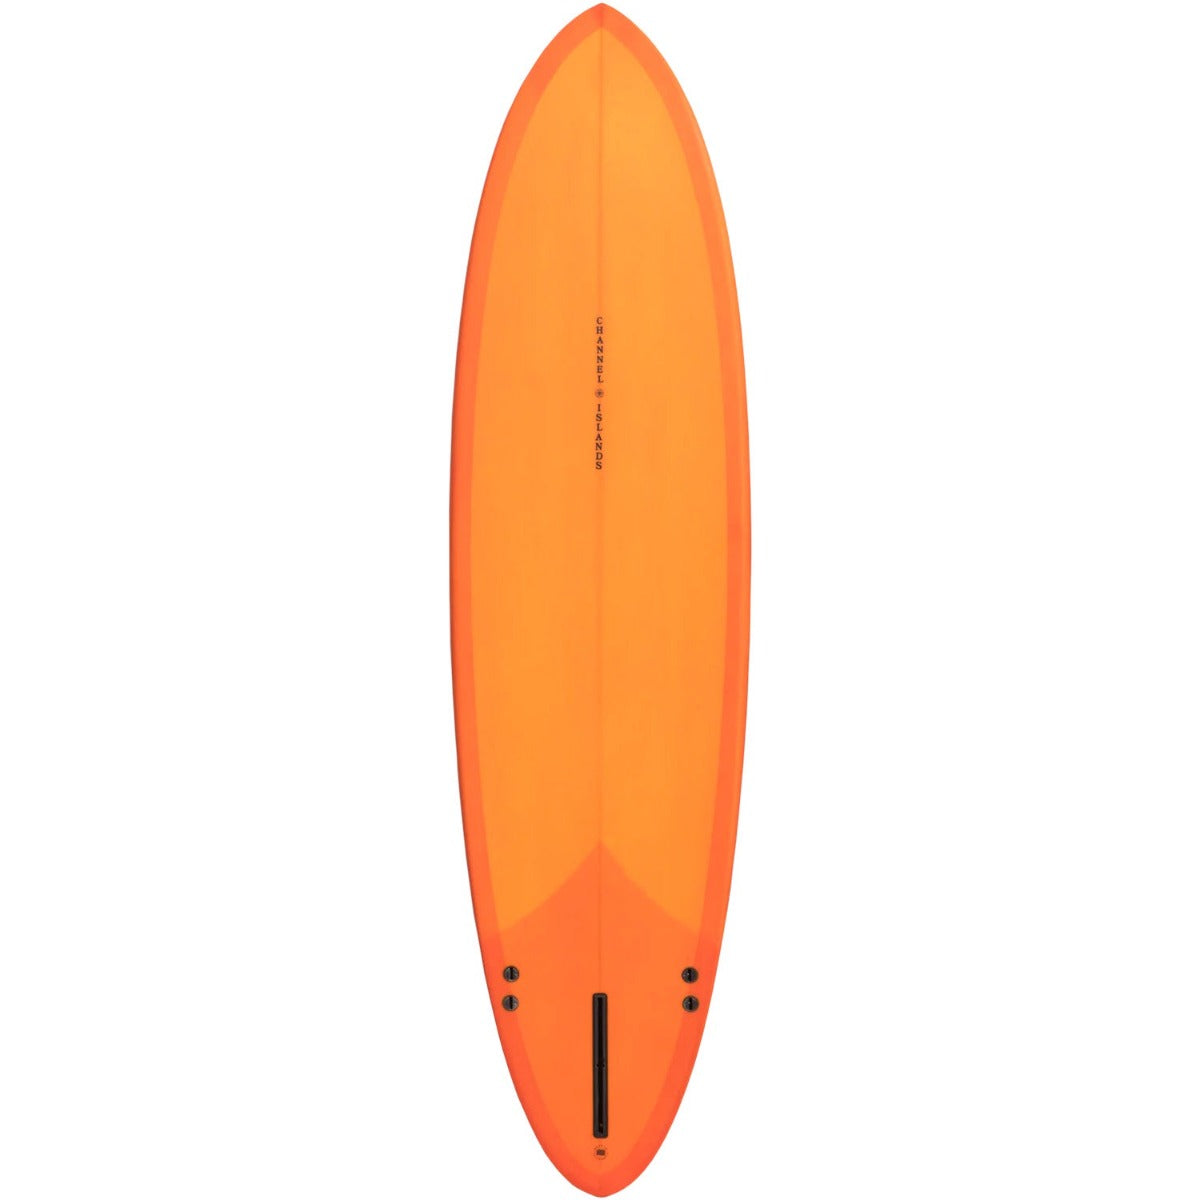 channel-islands-surfboards-ci-mid-orange-bottom-midlength-galway-ireland-blacksheepsurfco